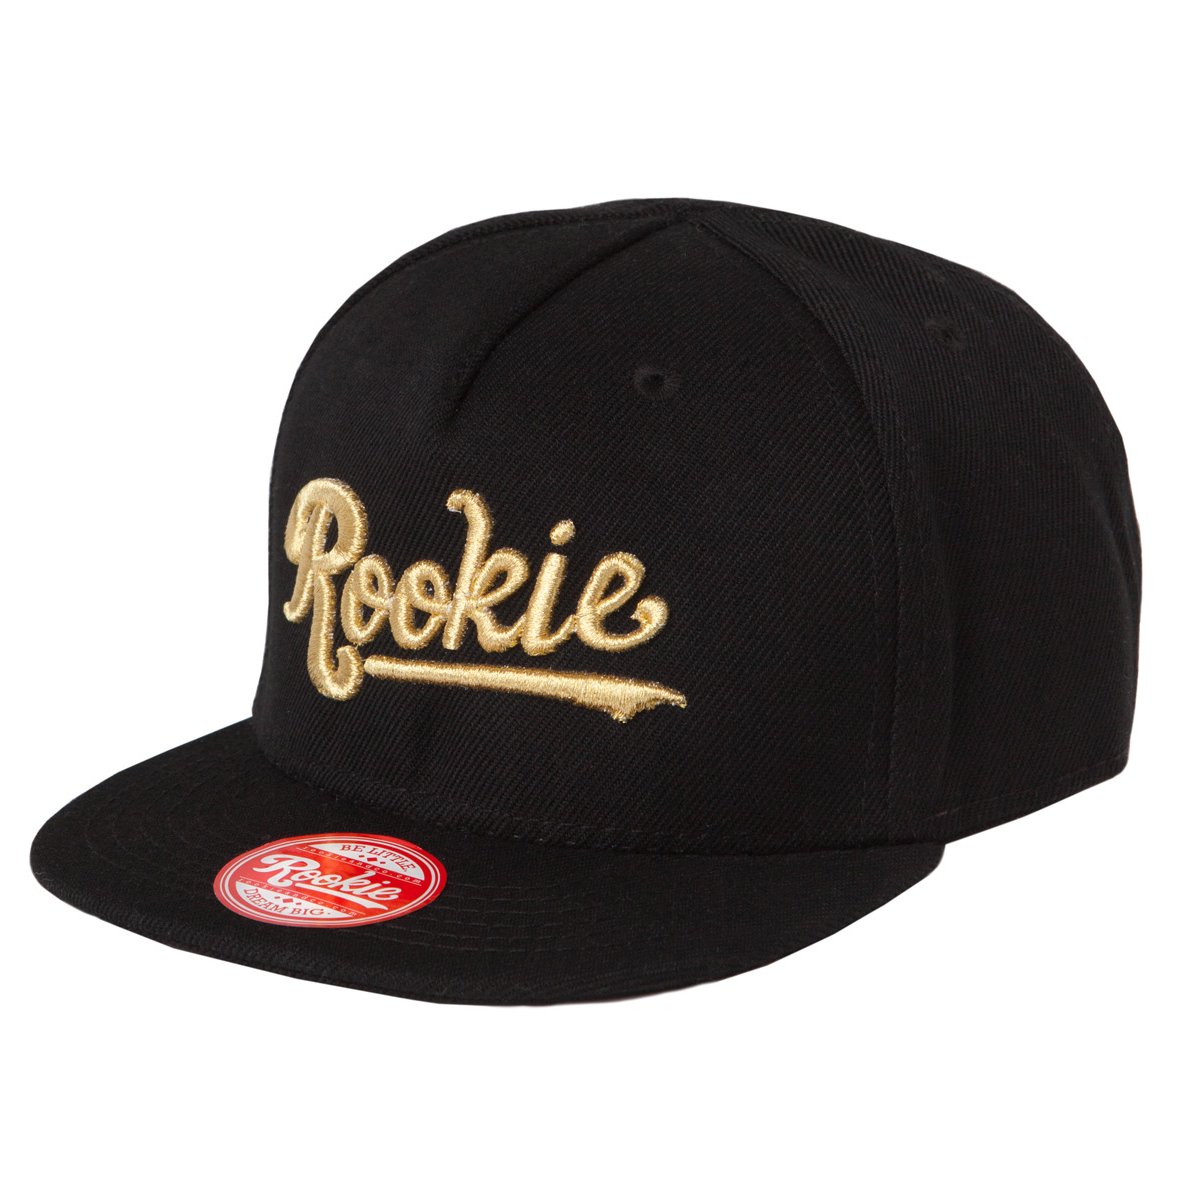 Rookie & Co.